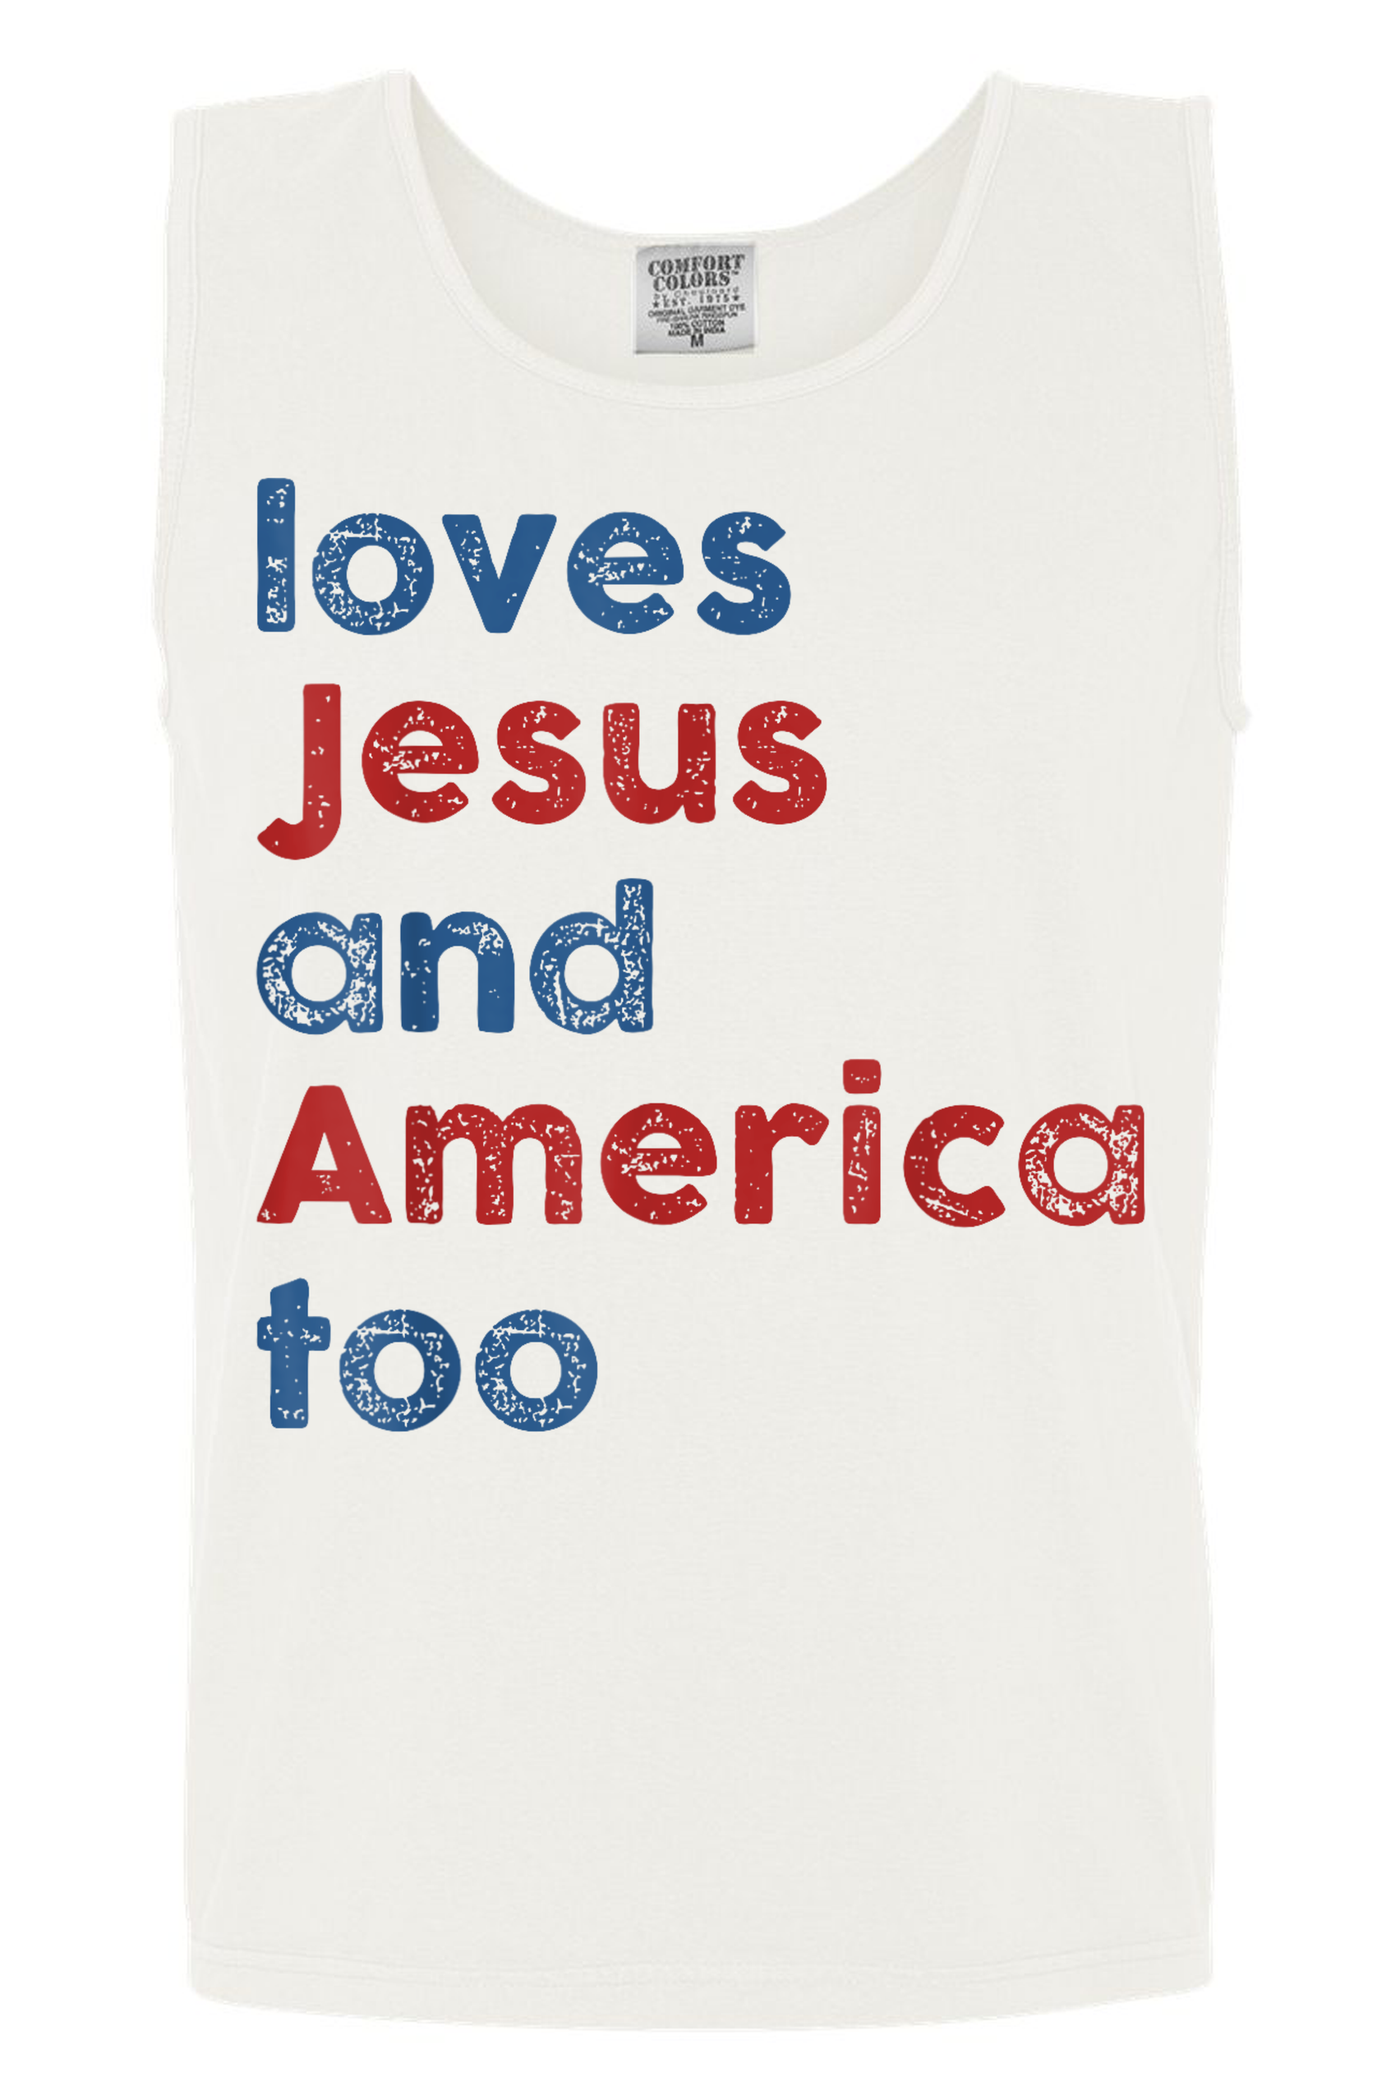 Loves Jesus & America Too Tee/Tank